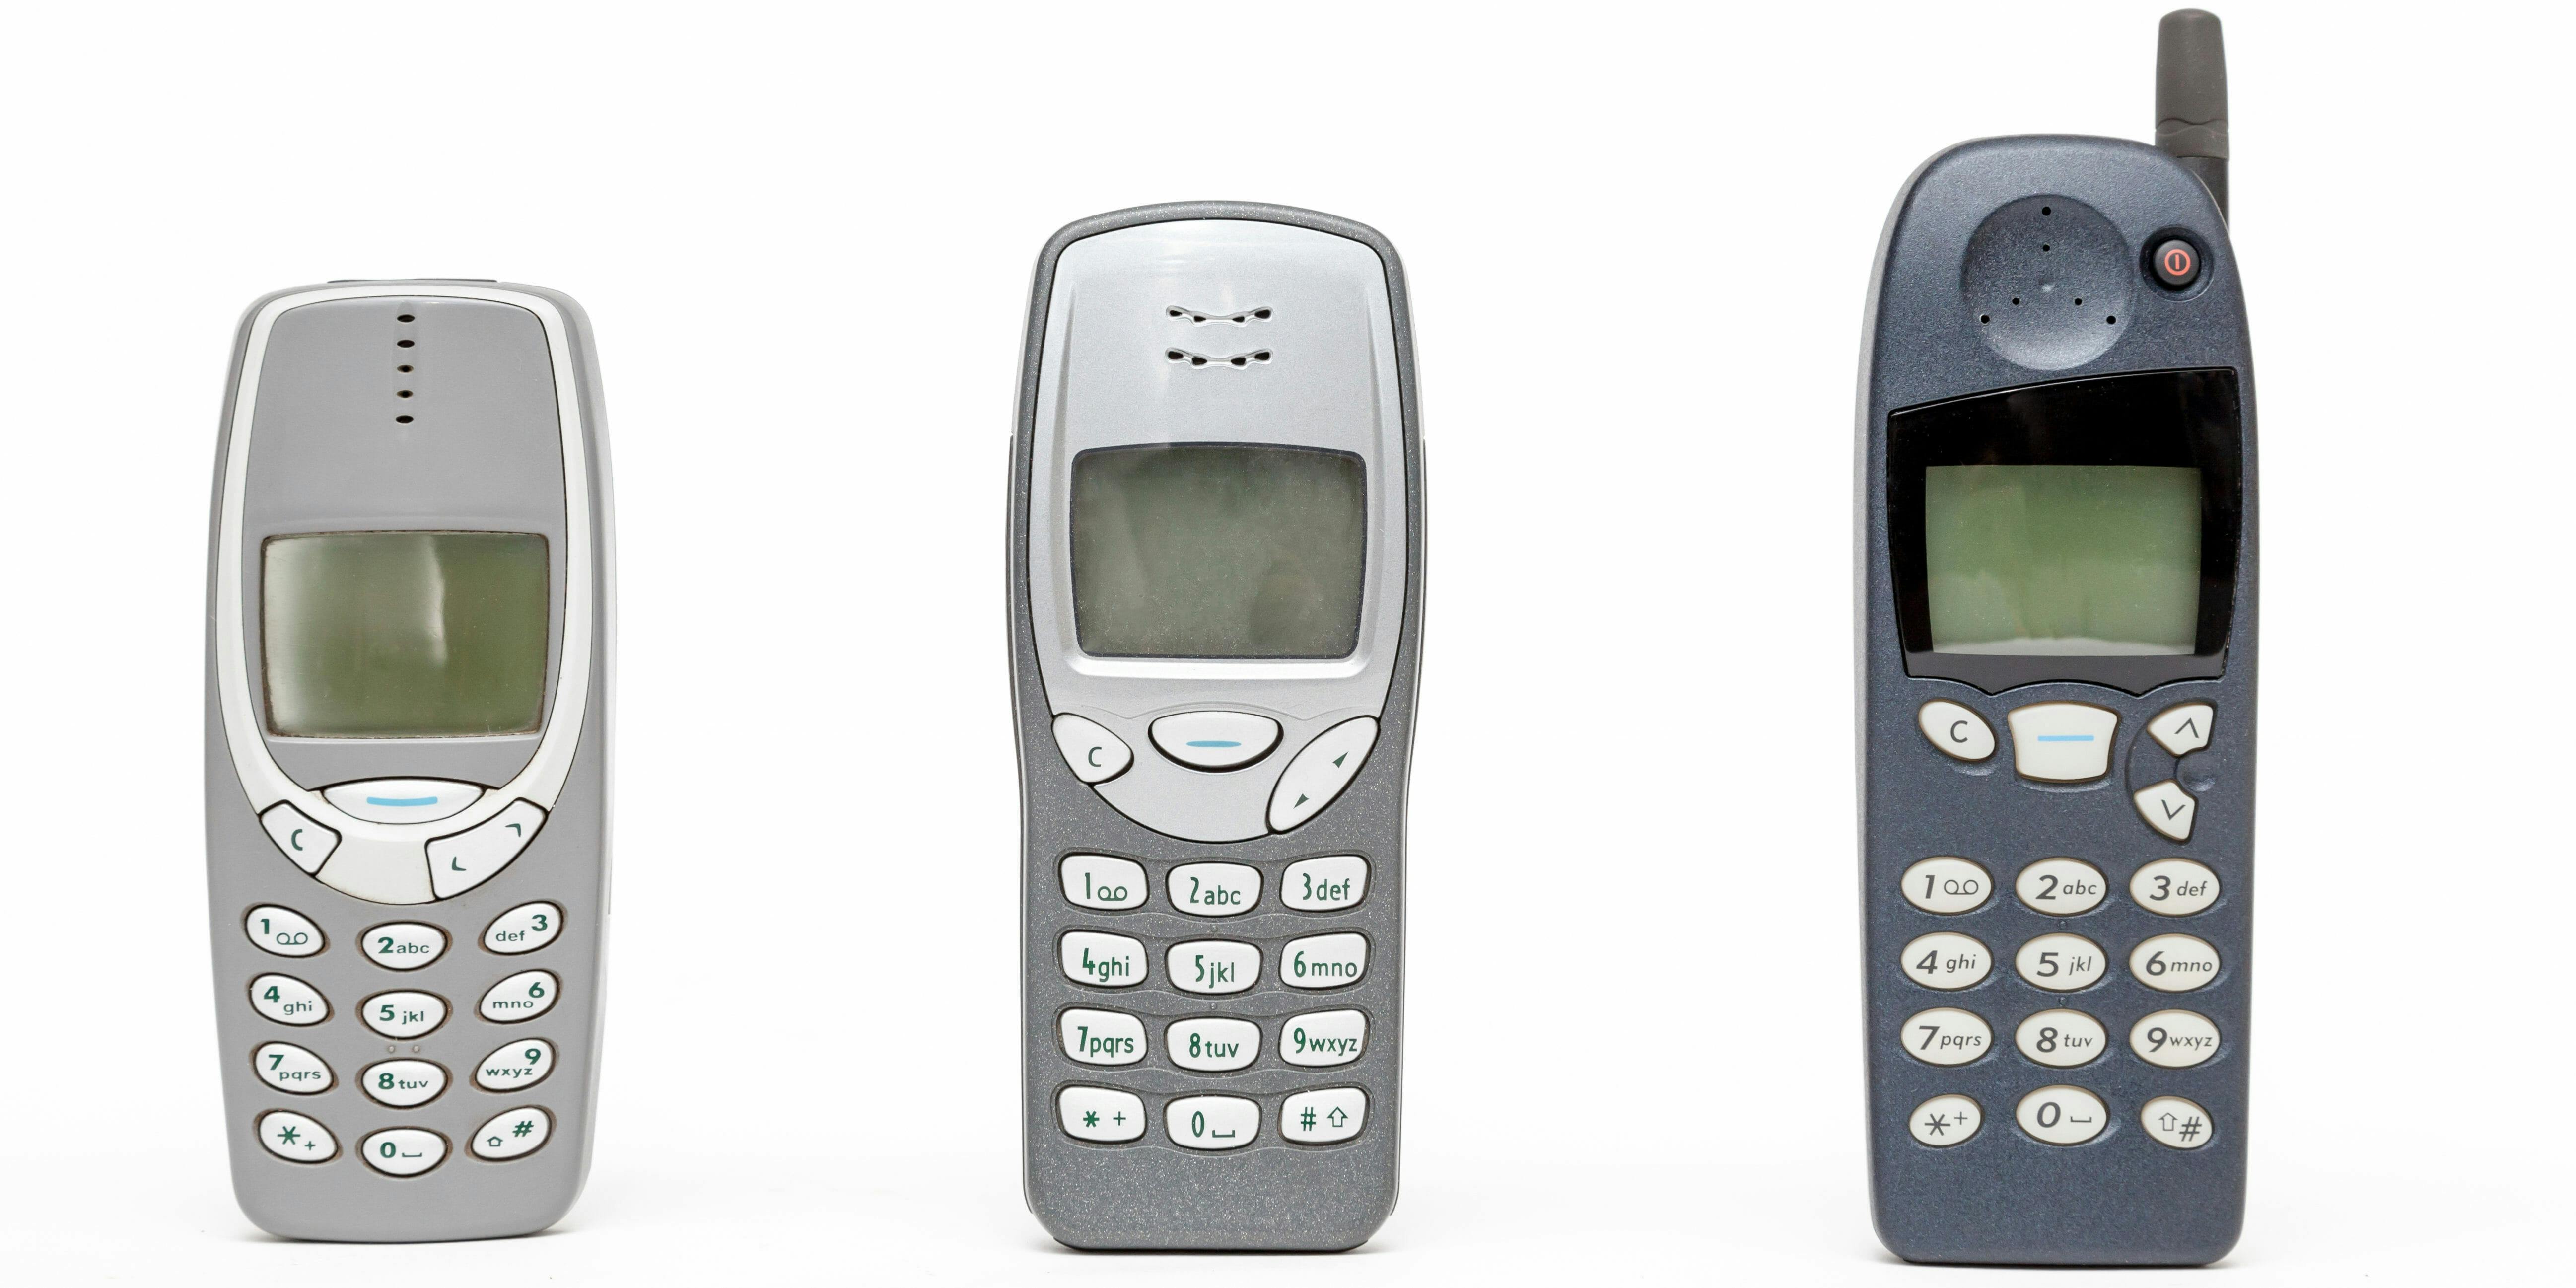 Nokia 3310 12 Fascinating Facts About Nokia's Original 'Brick' Phones